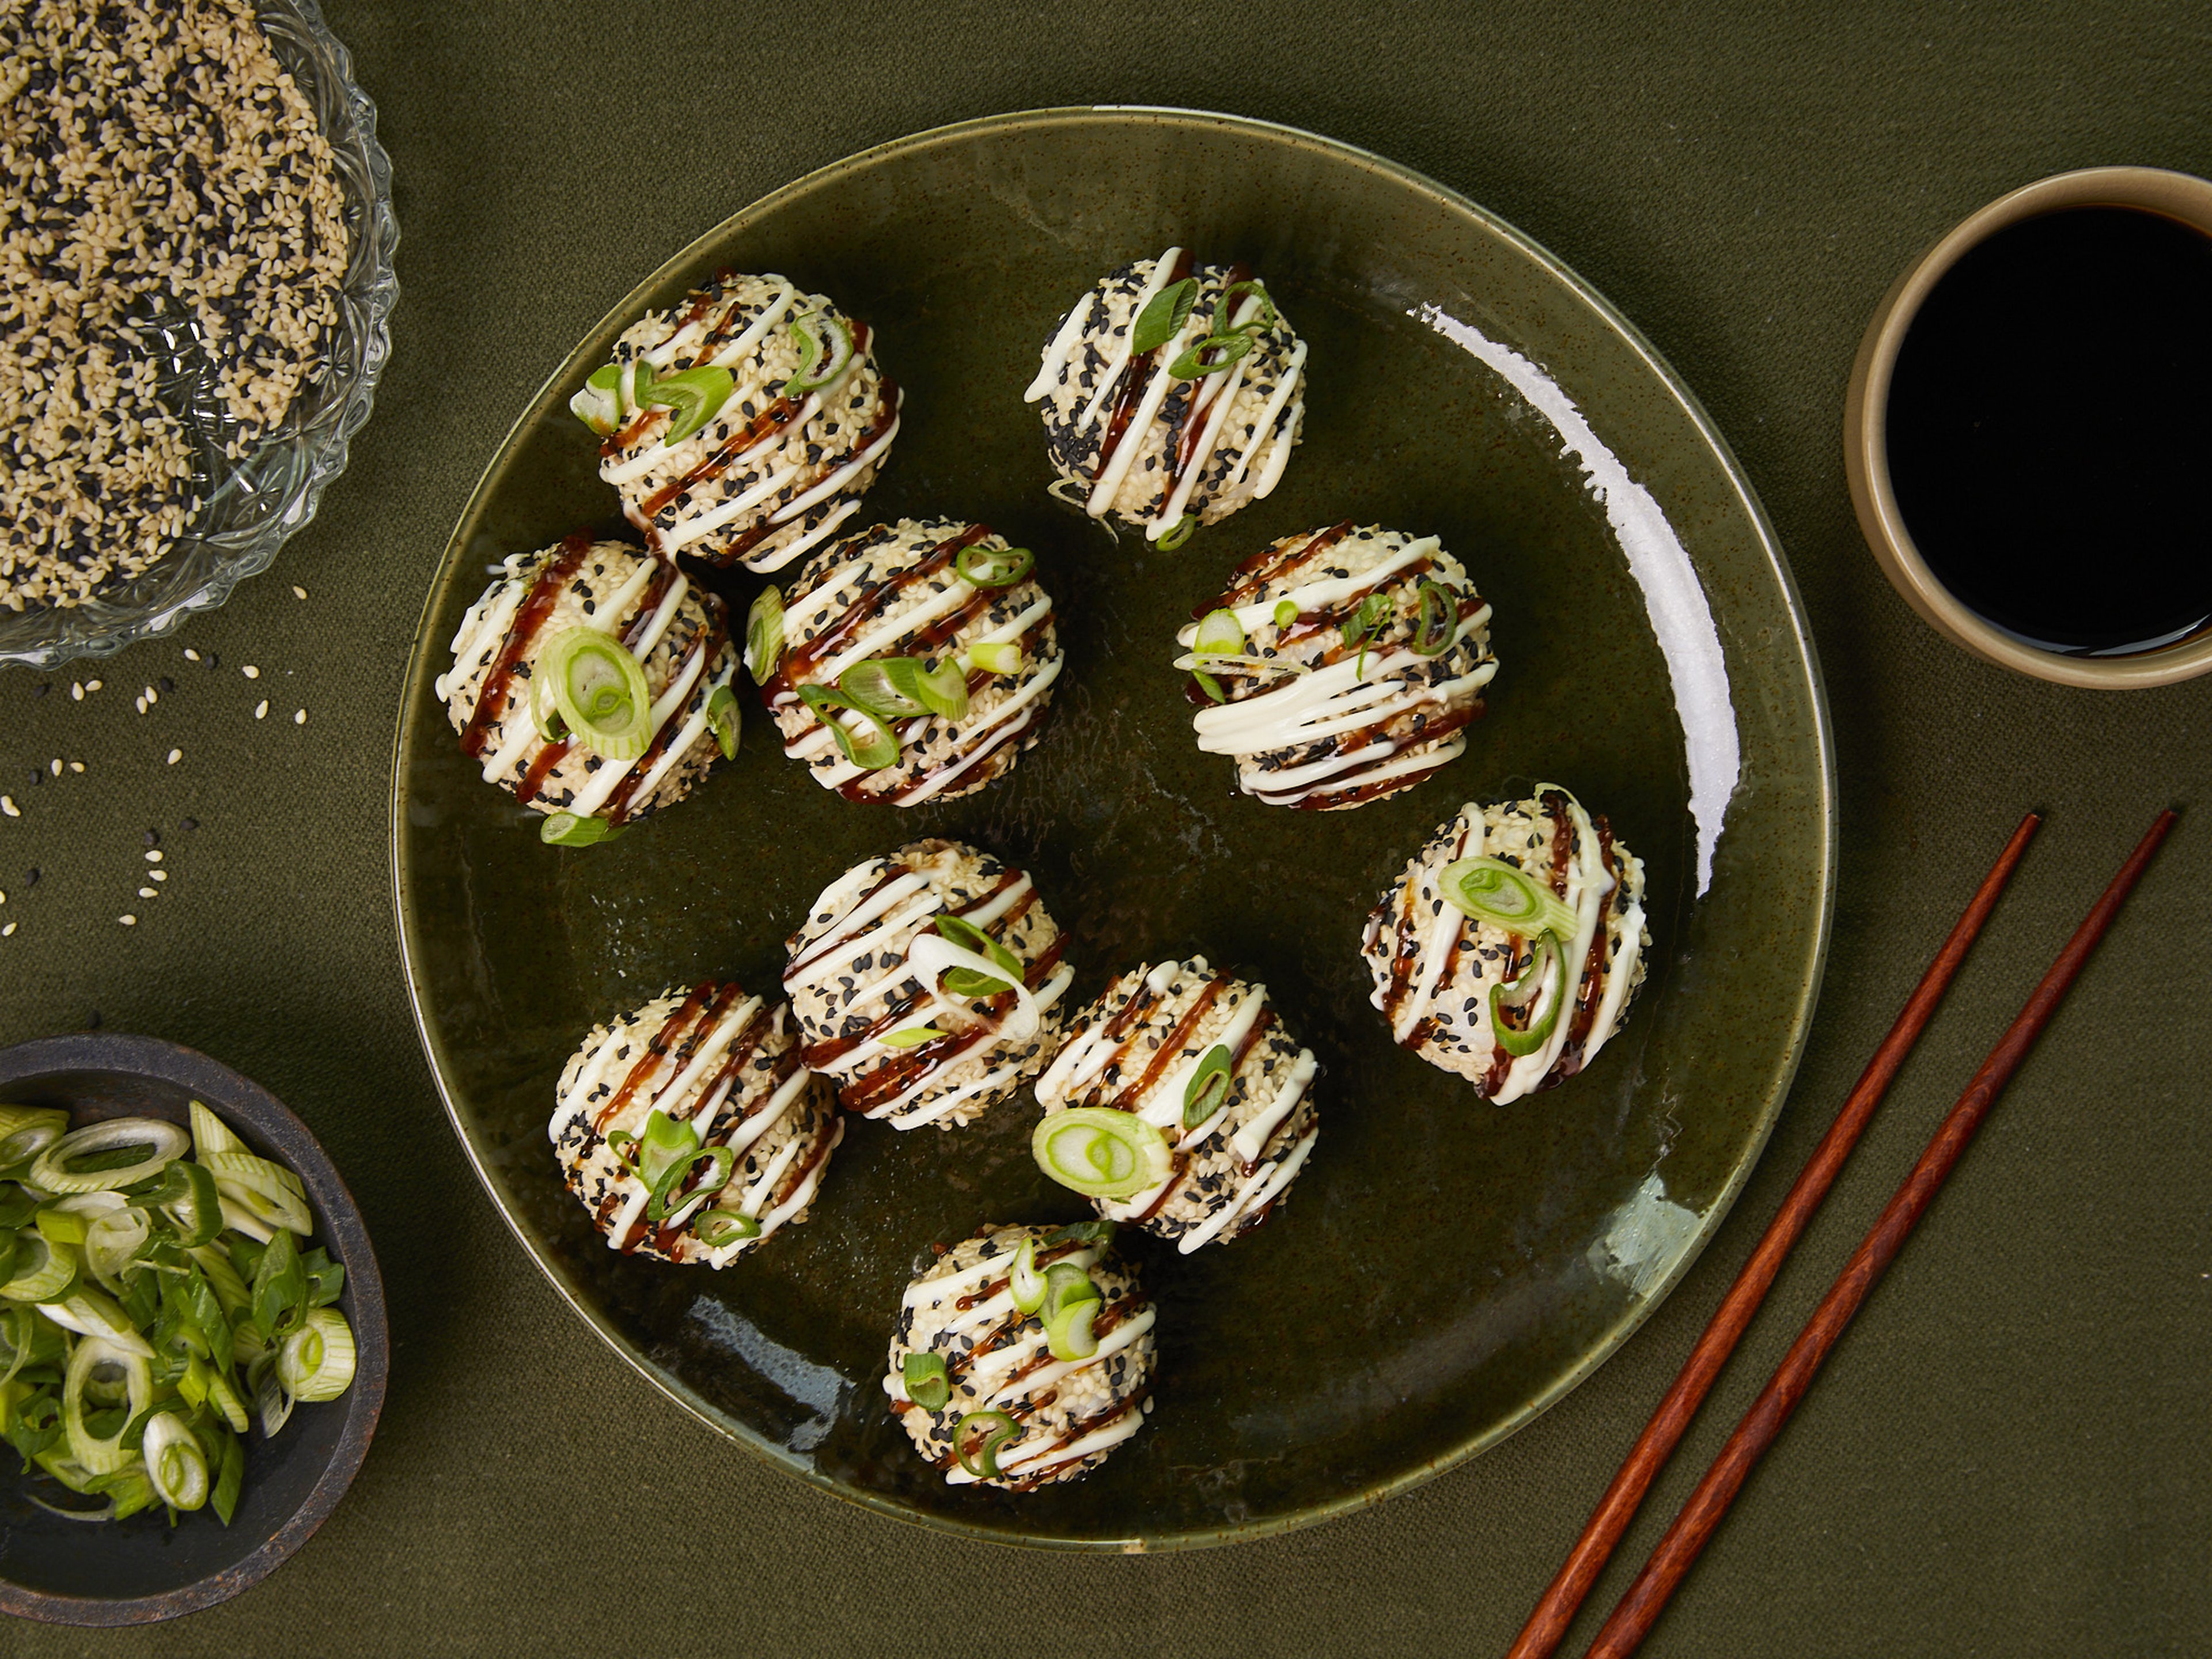 California sushi rice balls with salmon and avocado